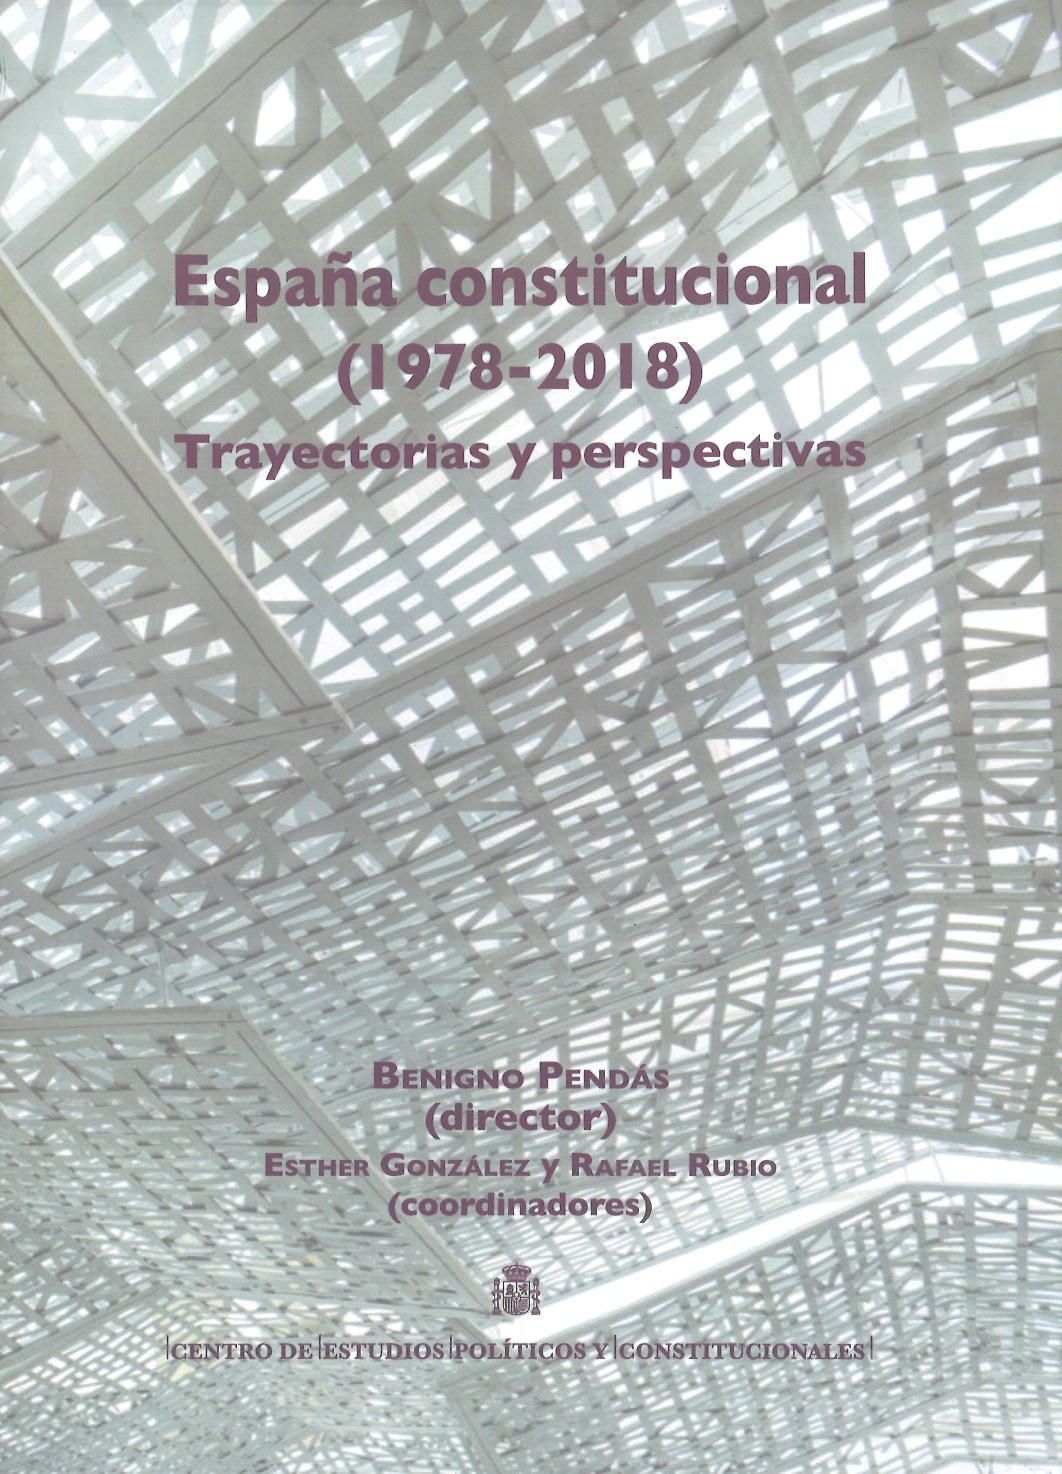 Imagen de portada del libro España constitucional (1978-2018)